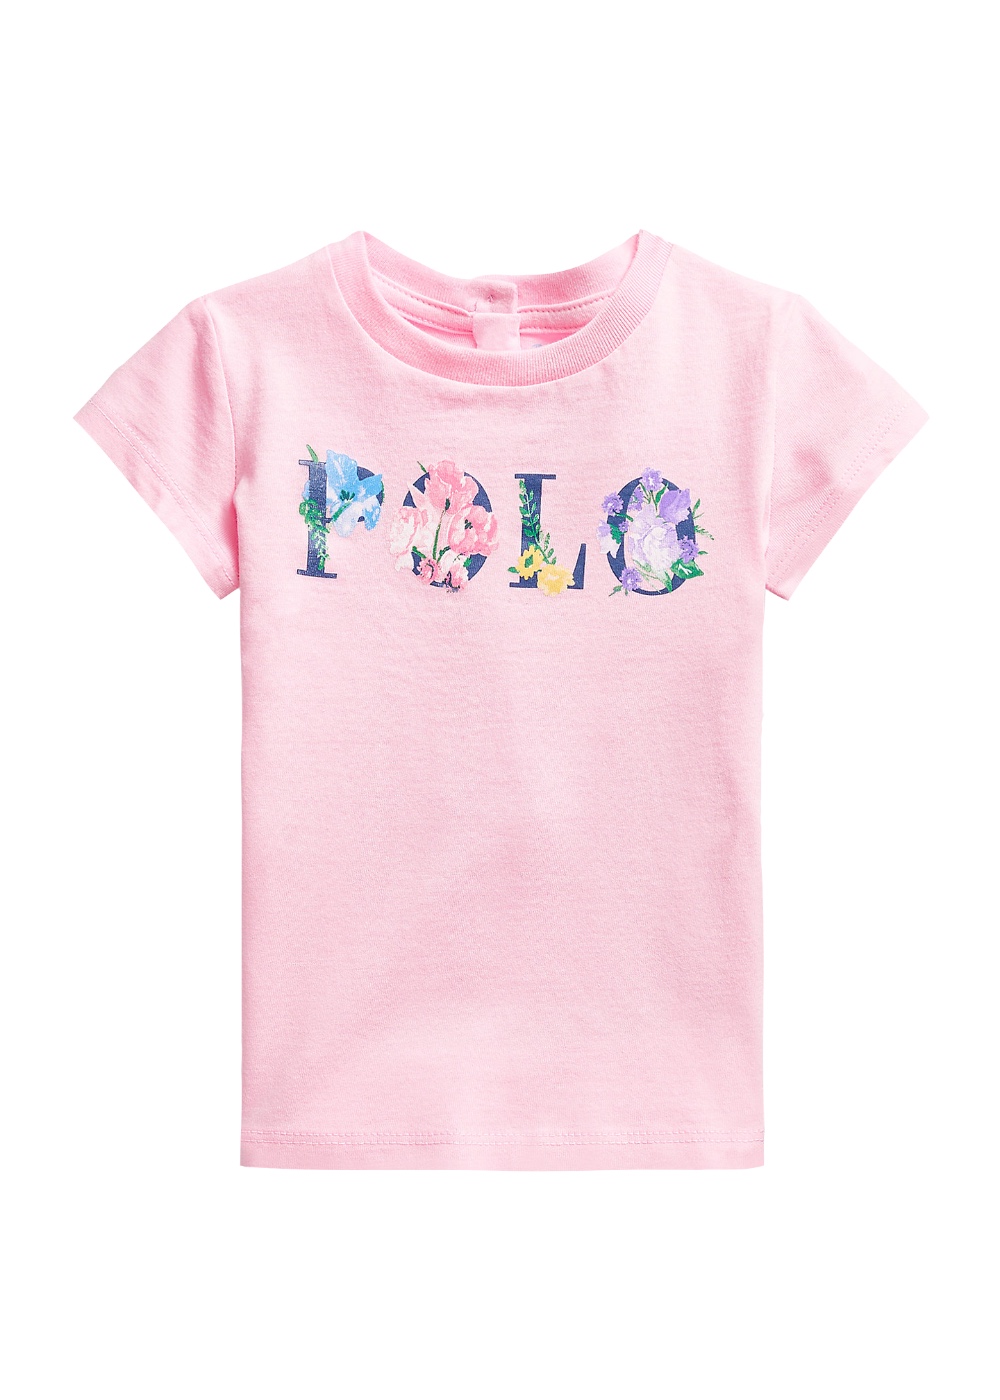 Featured image for “Polo Ralph Lauren T-shirt neonata”